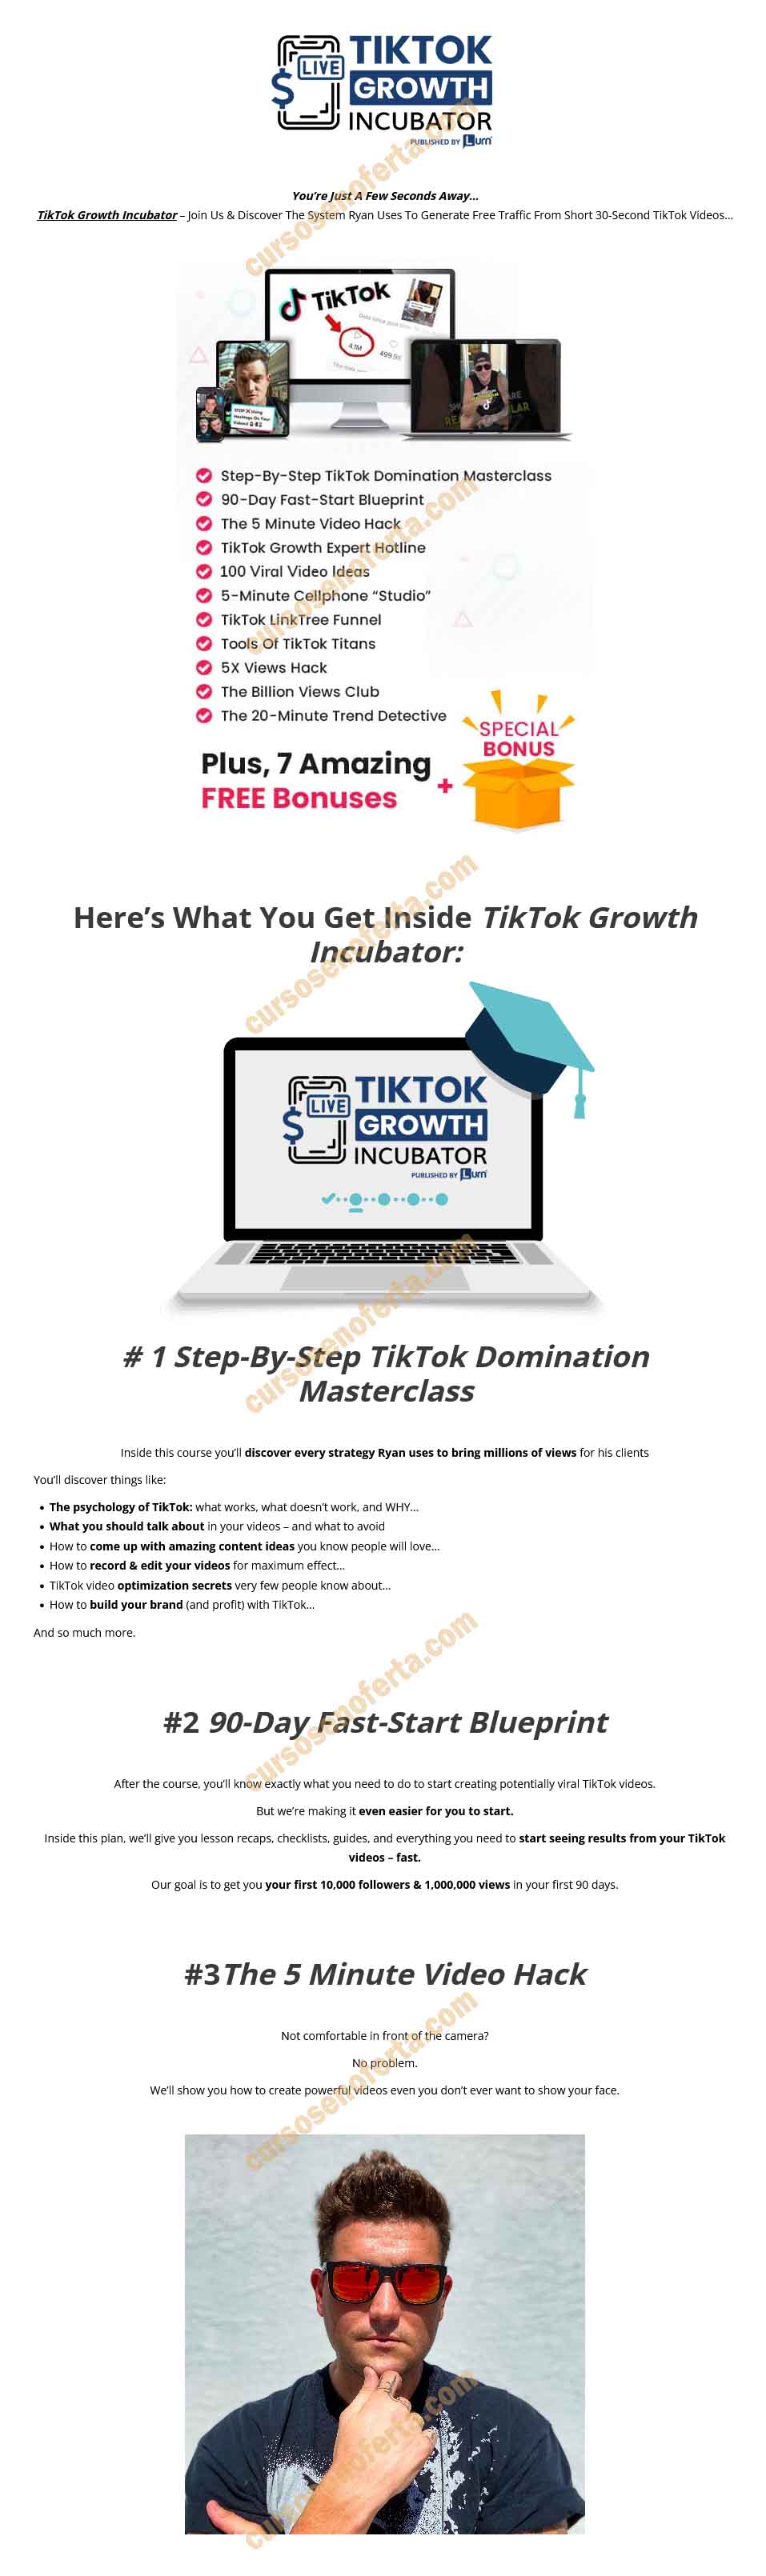 TikTok Growth Incubator - Ryan Magin (Inglés)